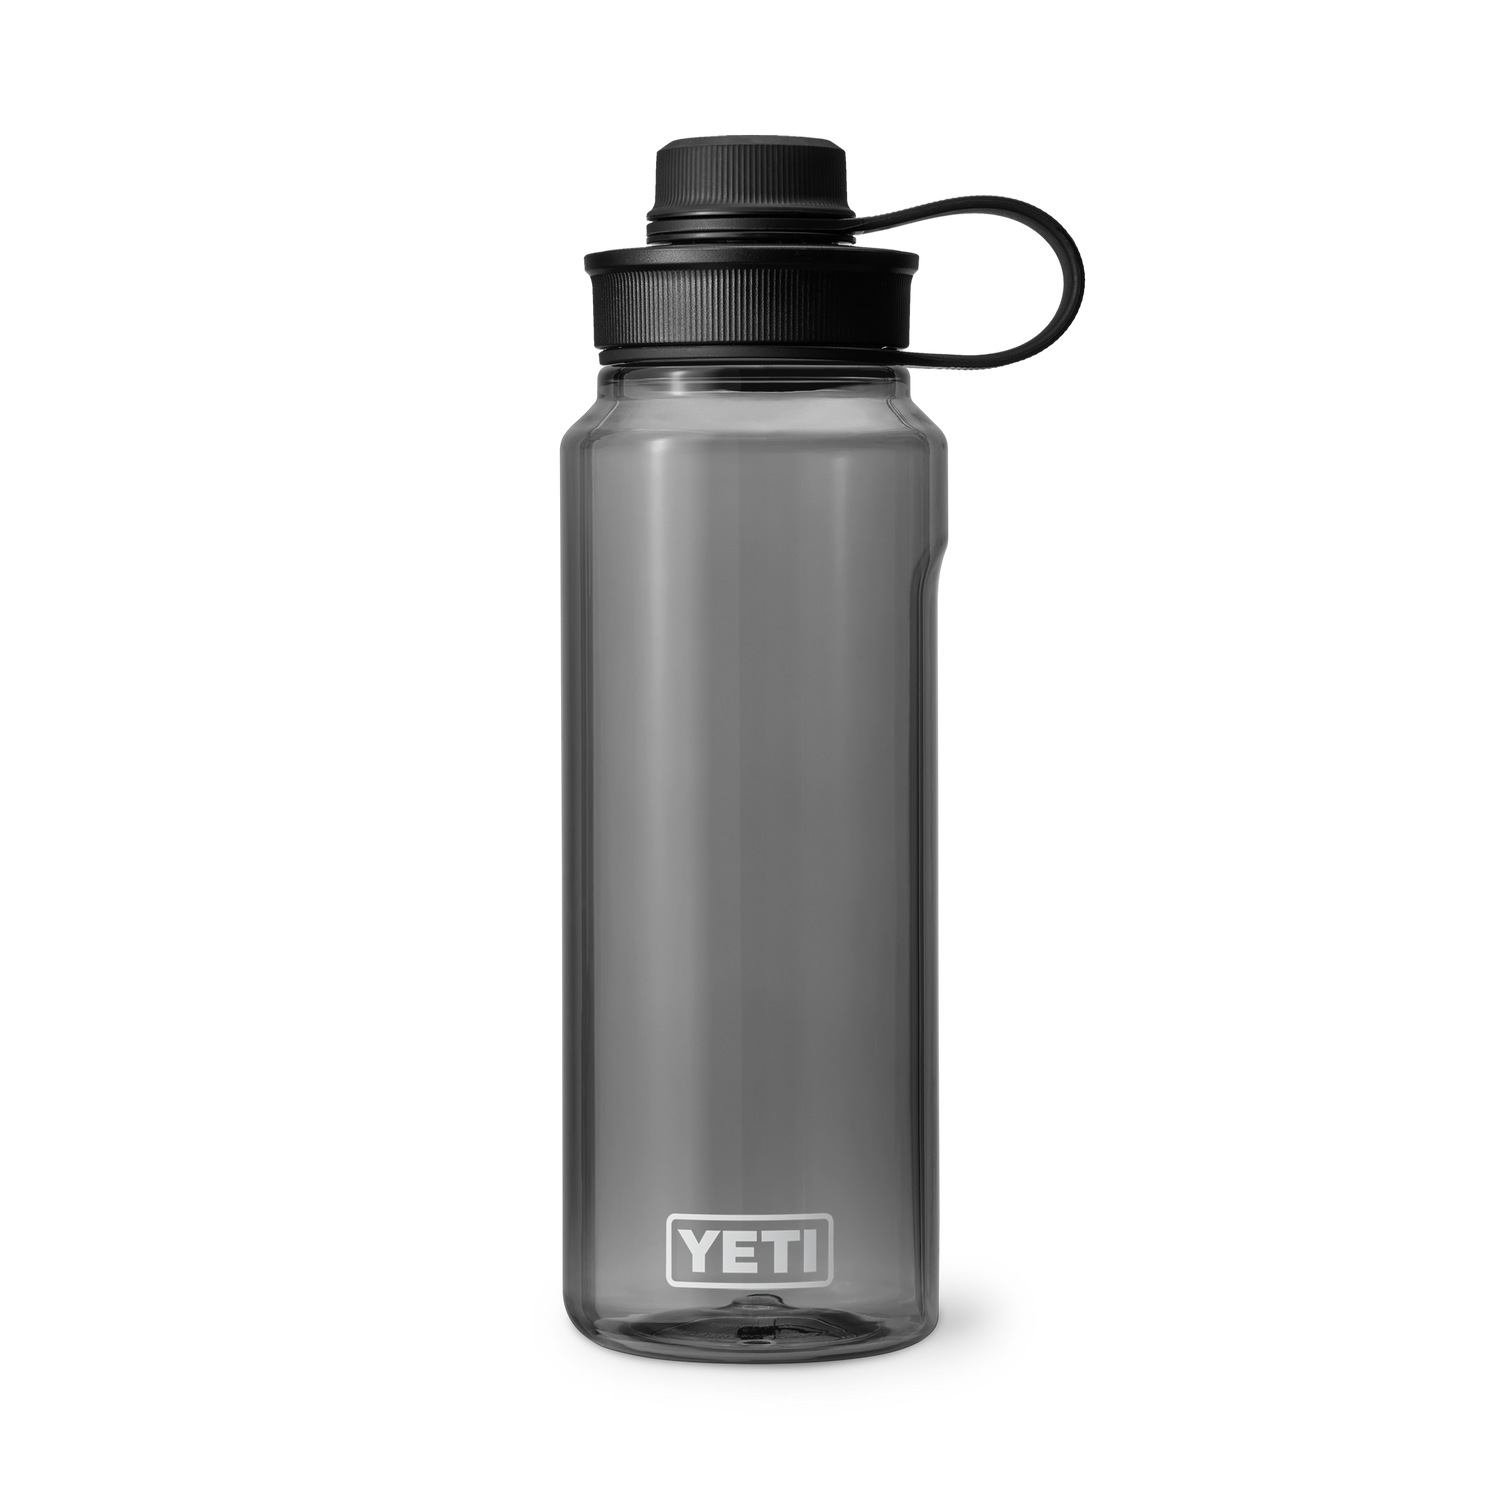 Yonder™ 1 L Water Bottle Charcoal